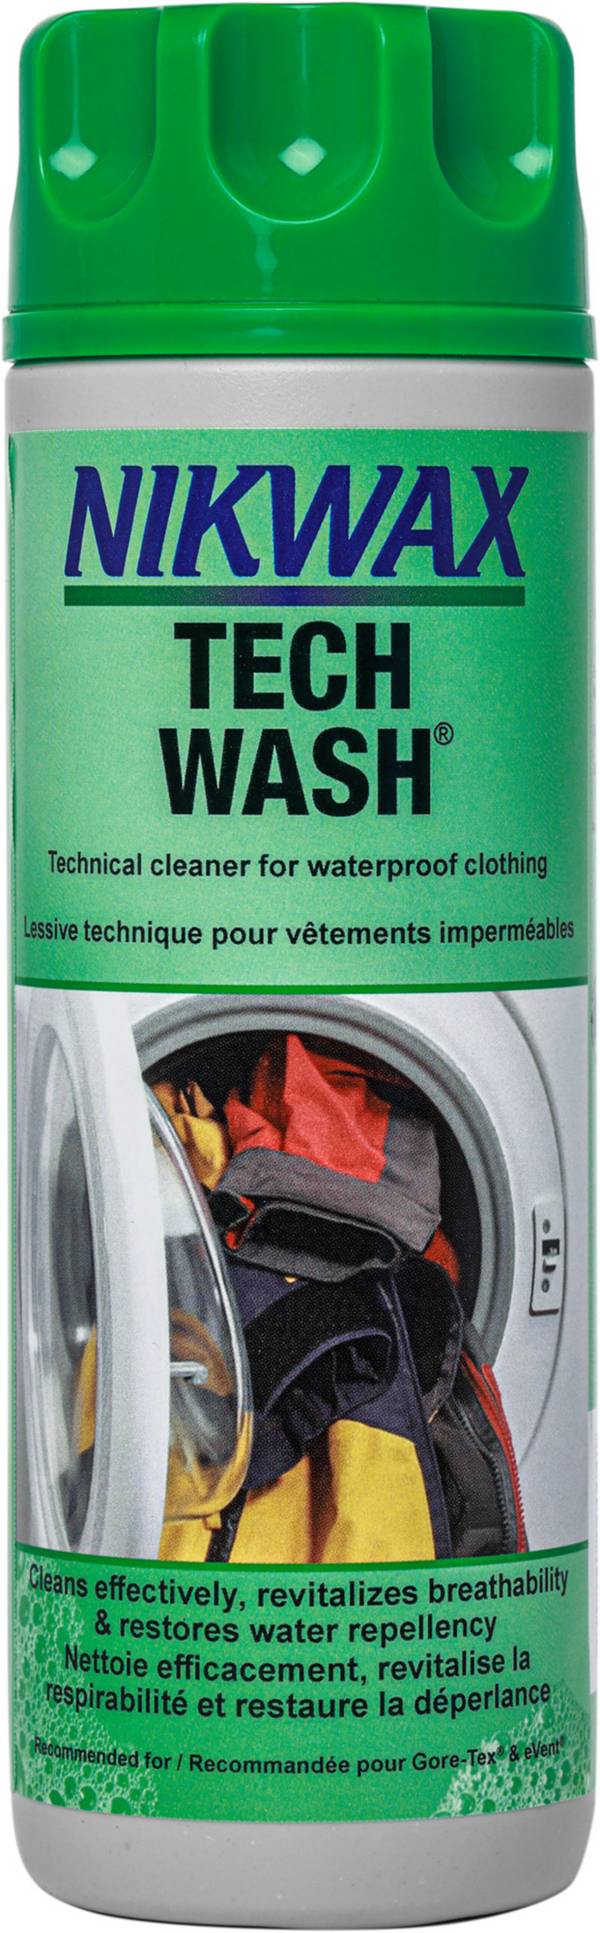 Nikwax Tech Wash product image